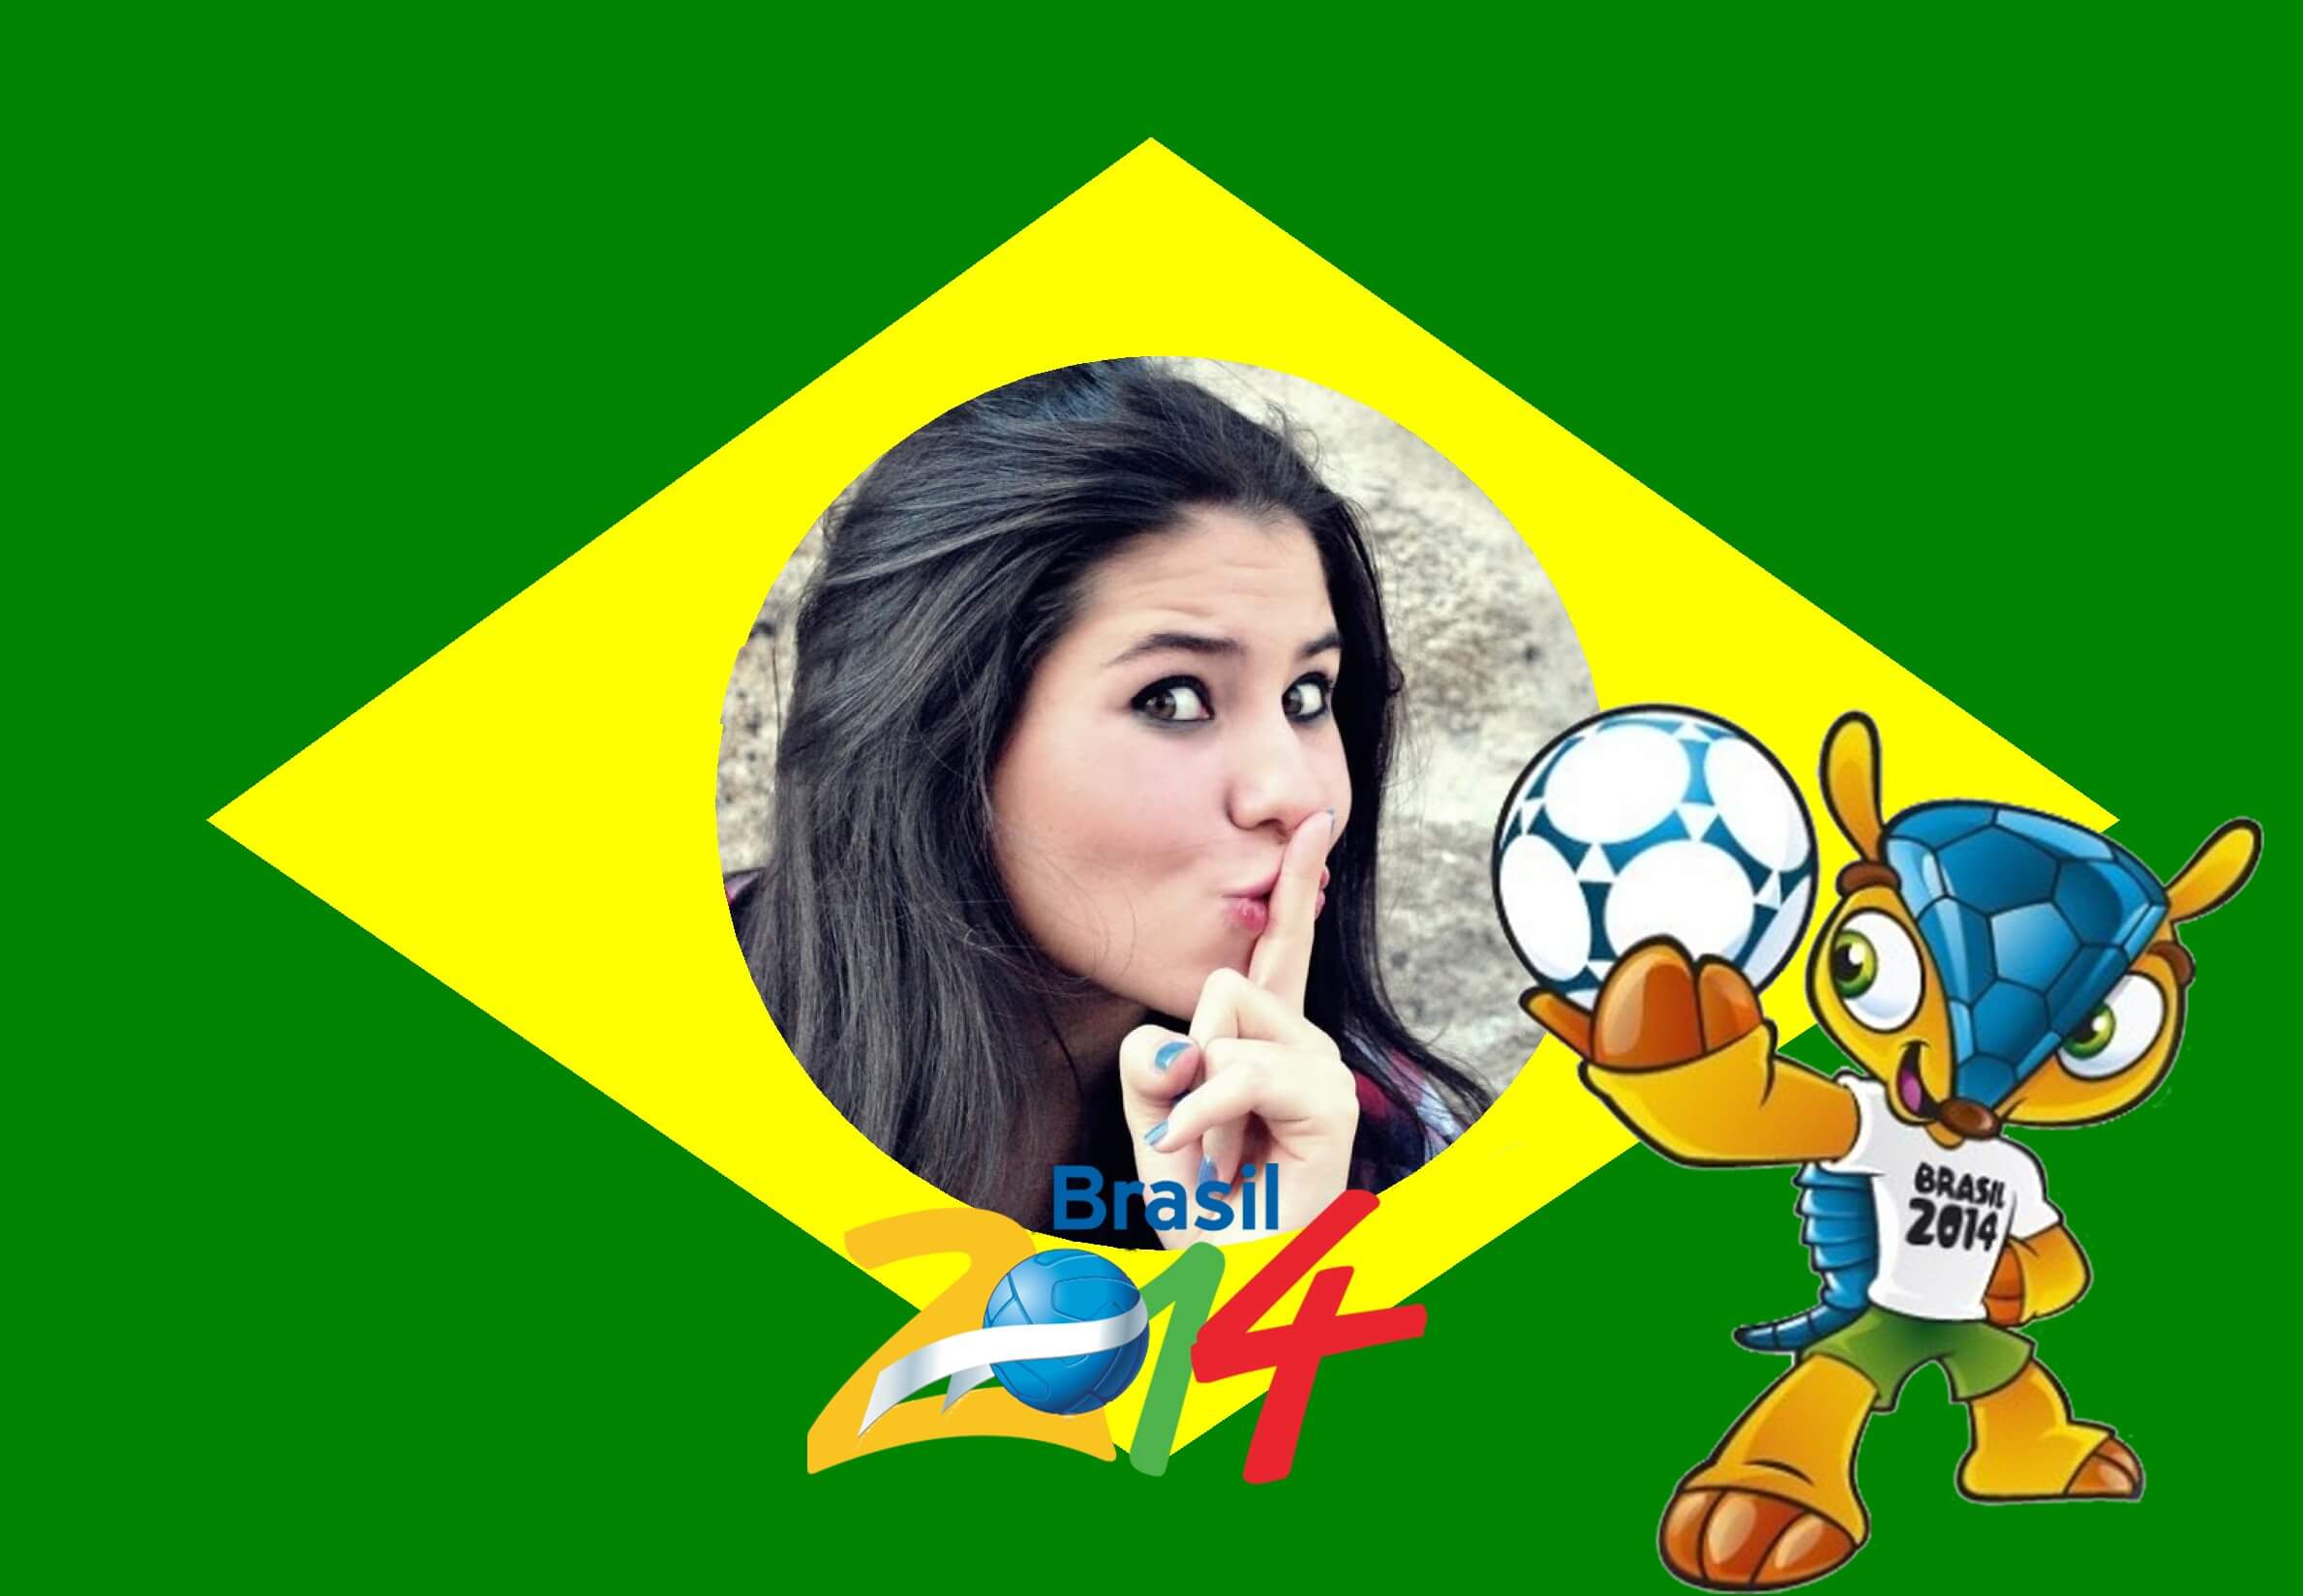 moldura-bandeira-do-brasil-e-copa-do-mundo